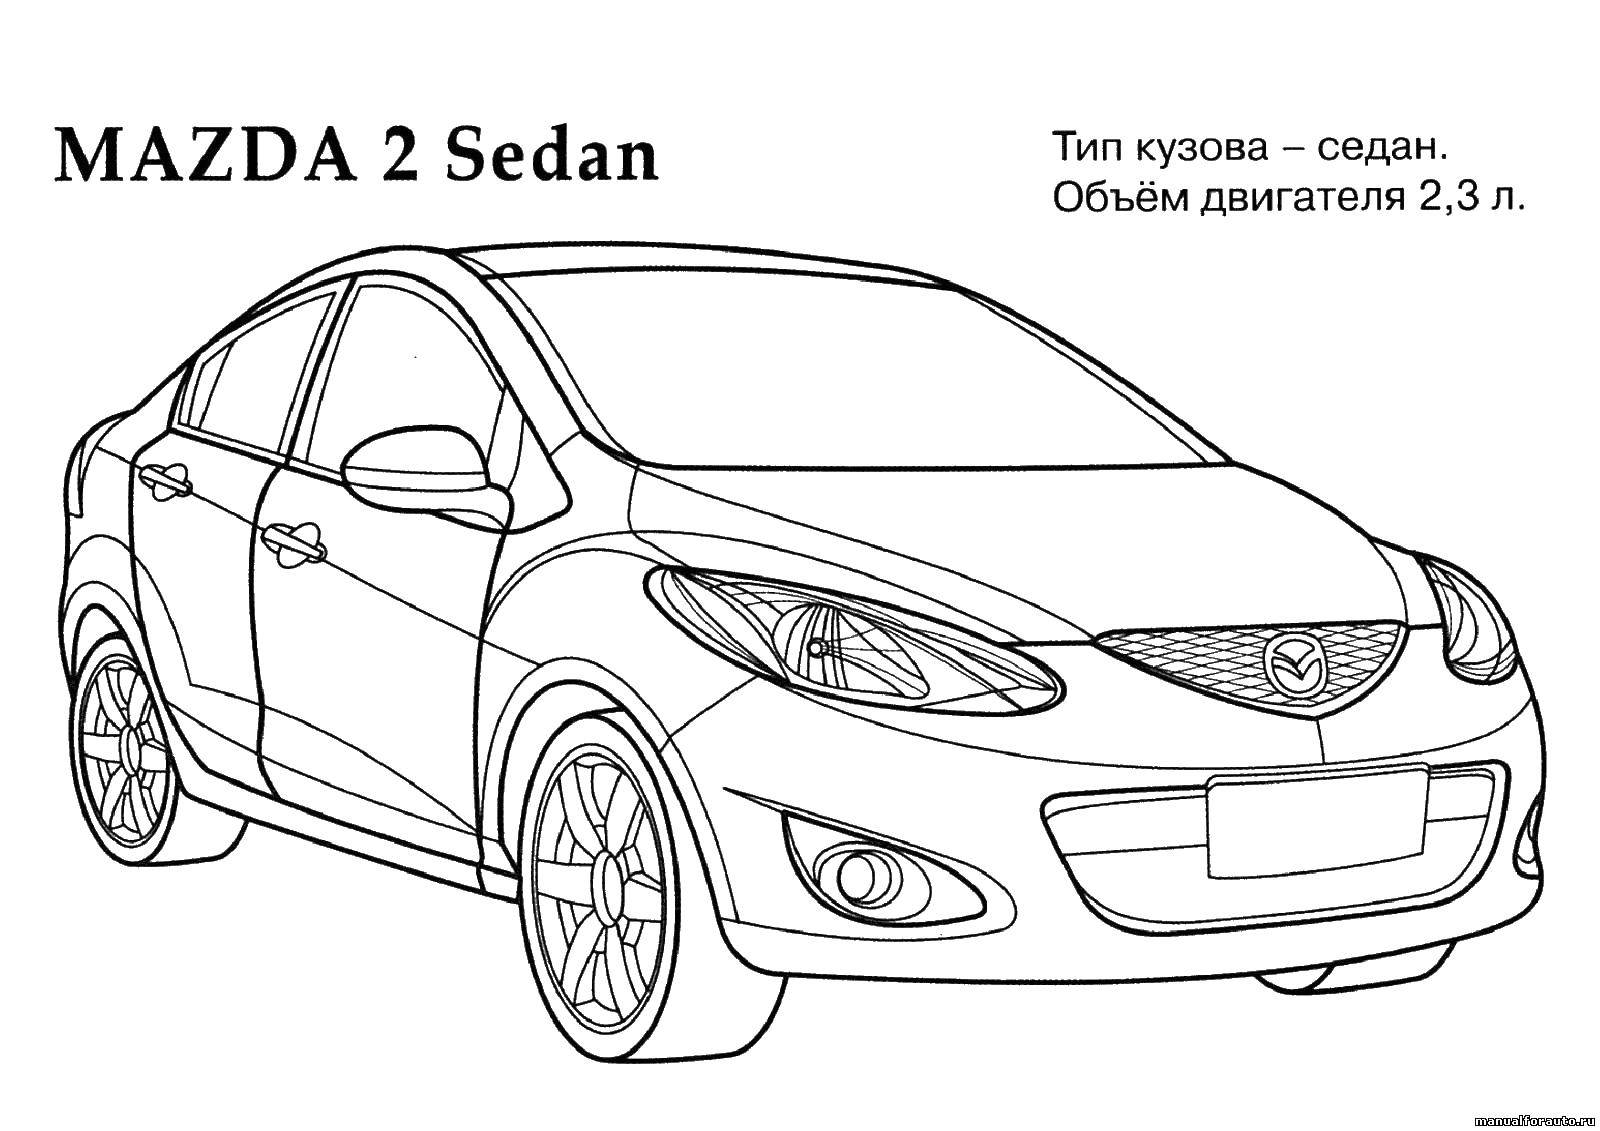 Coloring Mazda sedan. Category coloring. Tags:  Transport, car.